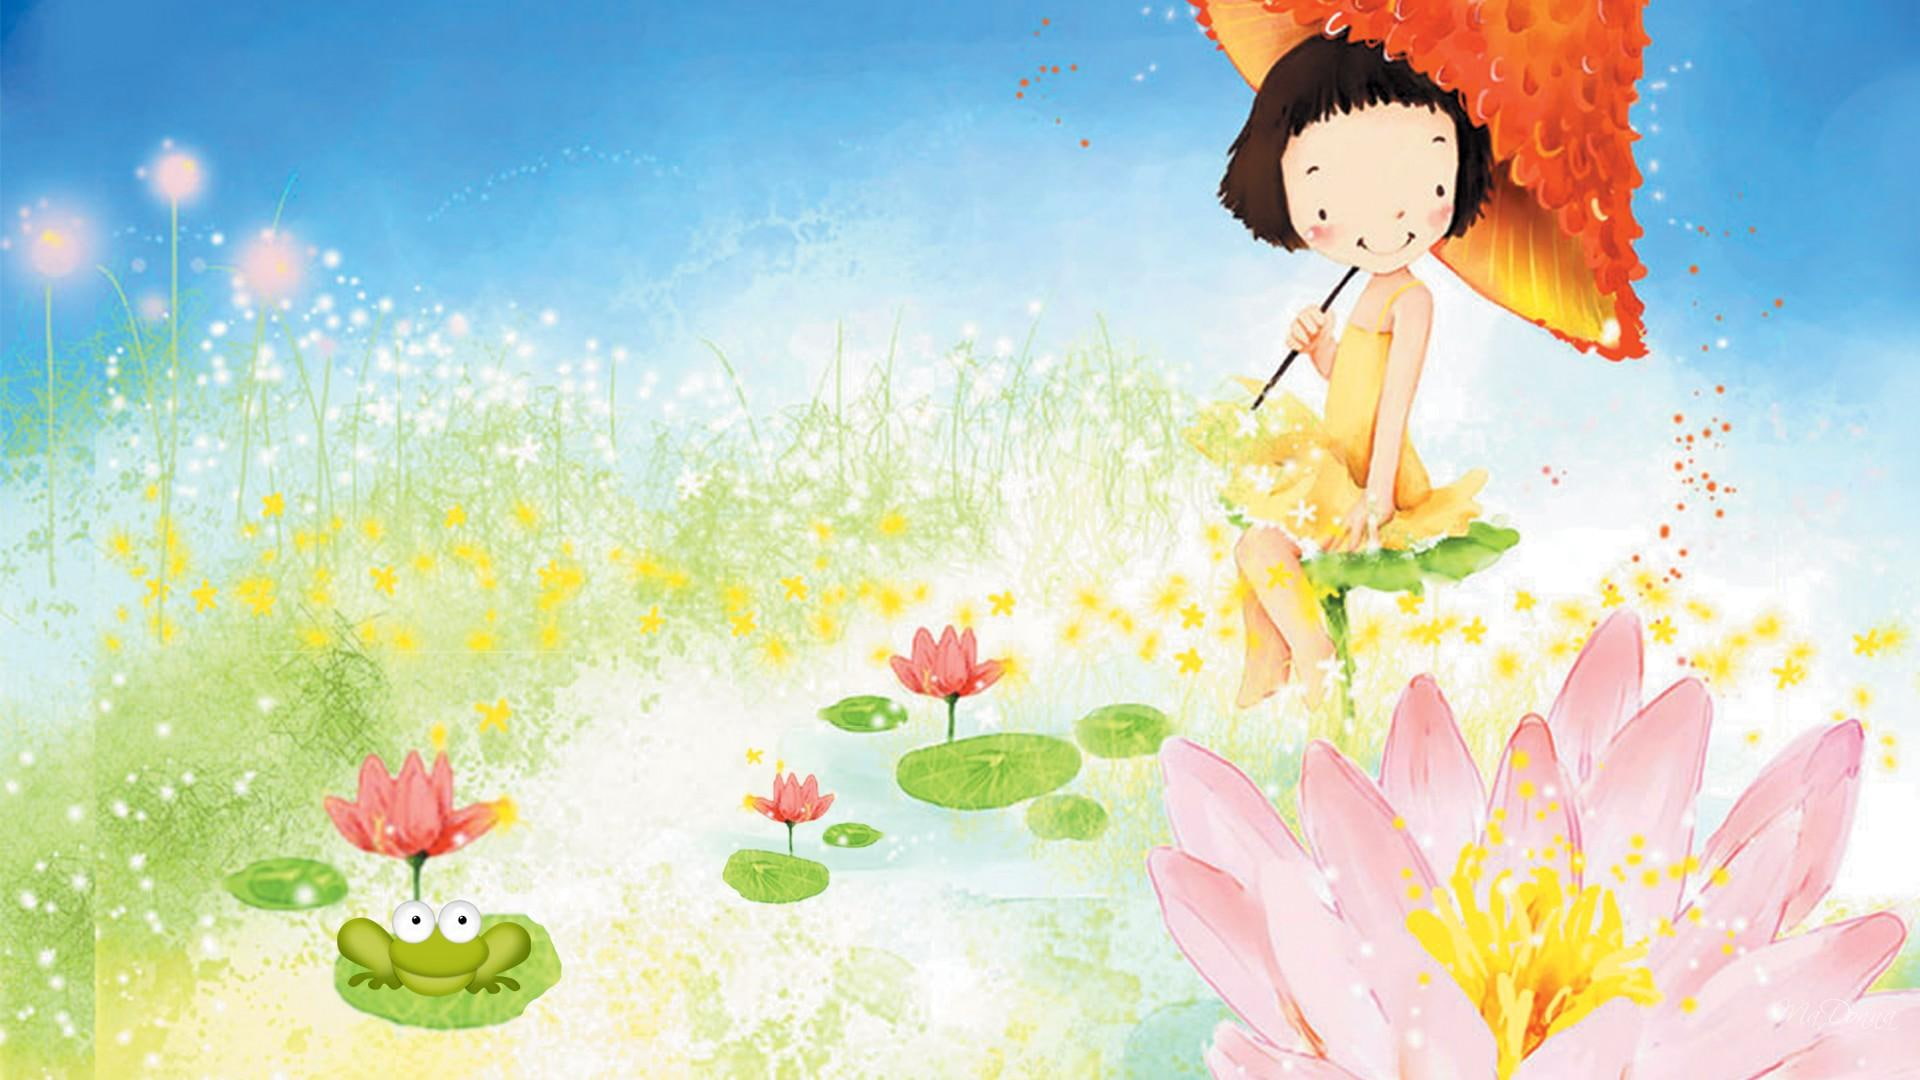 Umbrellla Girl, firefox persona, cute, pond, whimsical, flowers